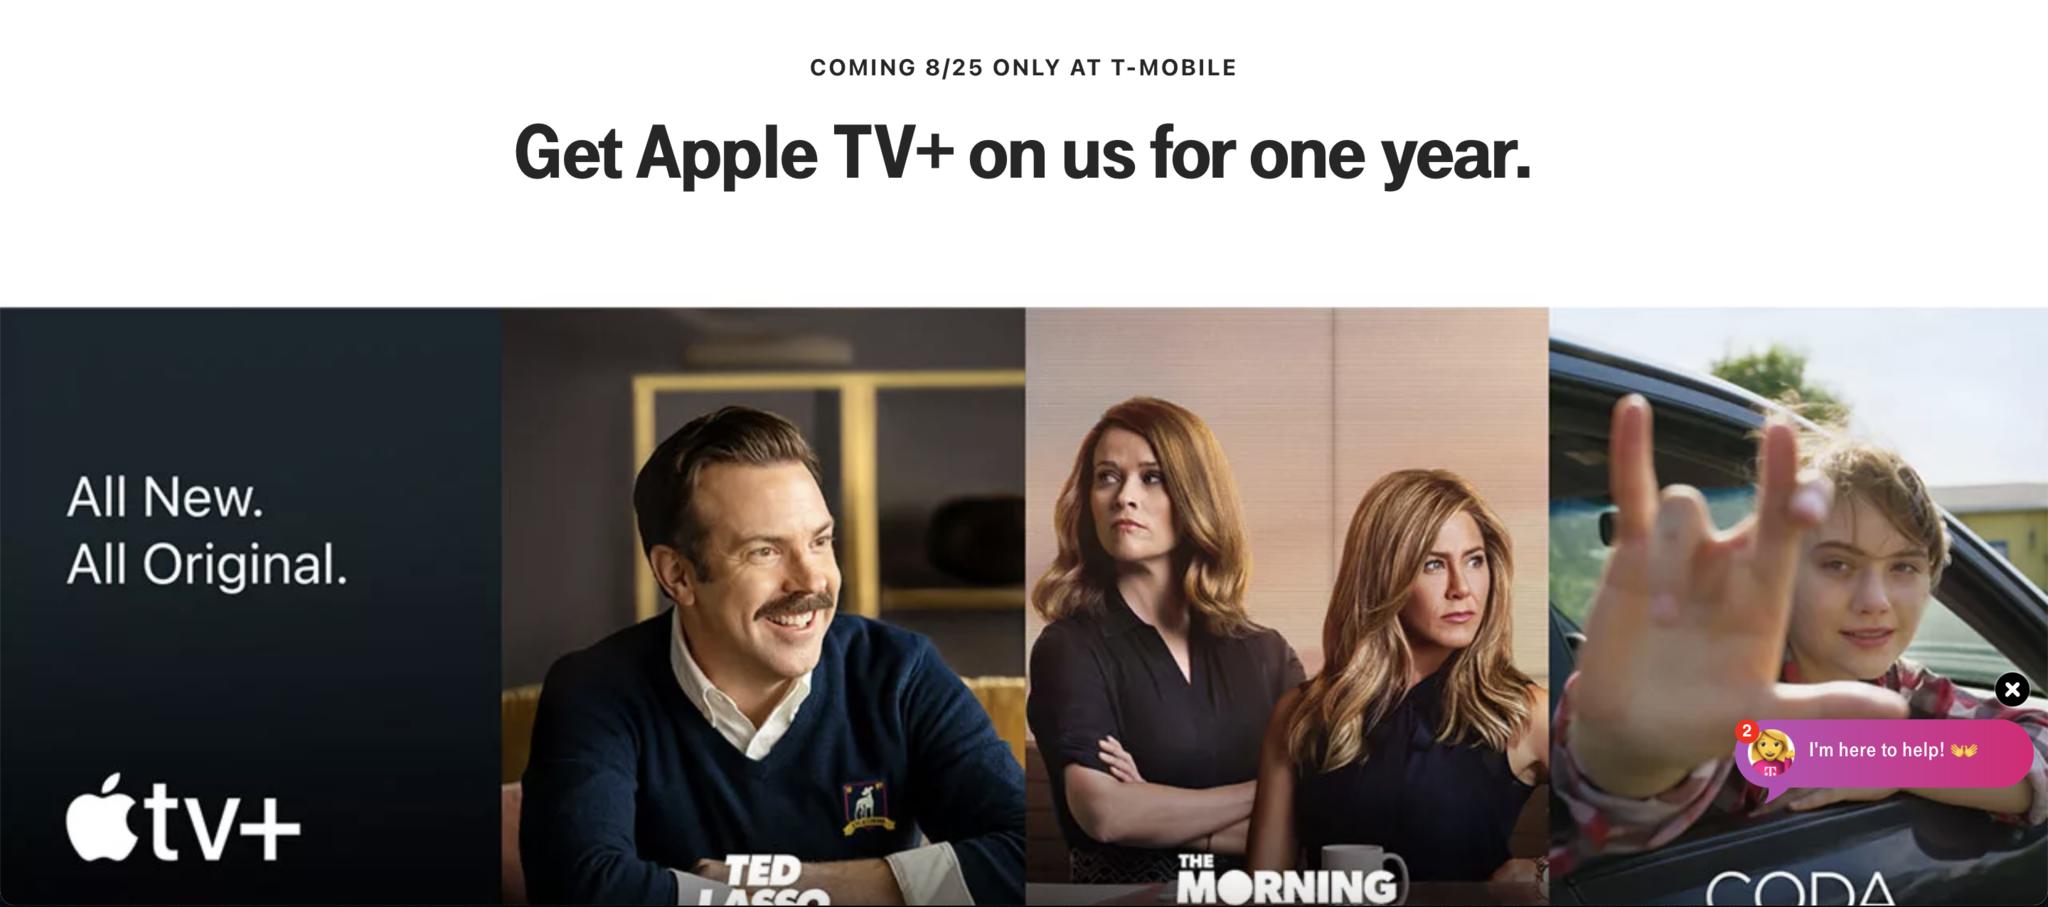 T Mobile Apple Tv Plus Offer